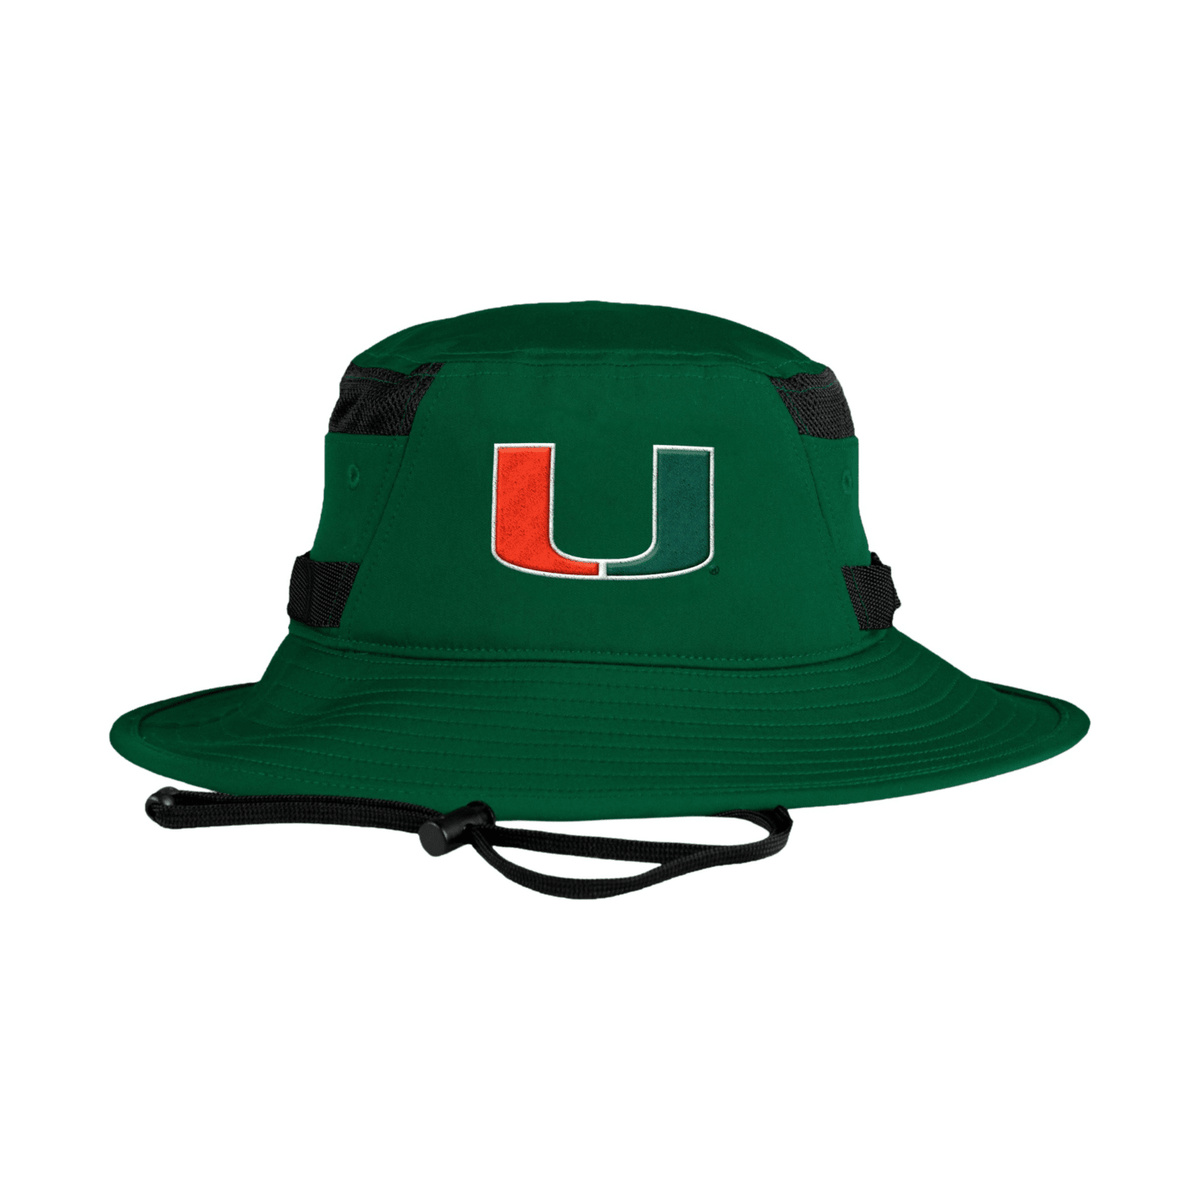 Adidas University of Miami Green Bucket Hat